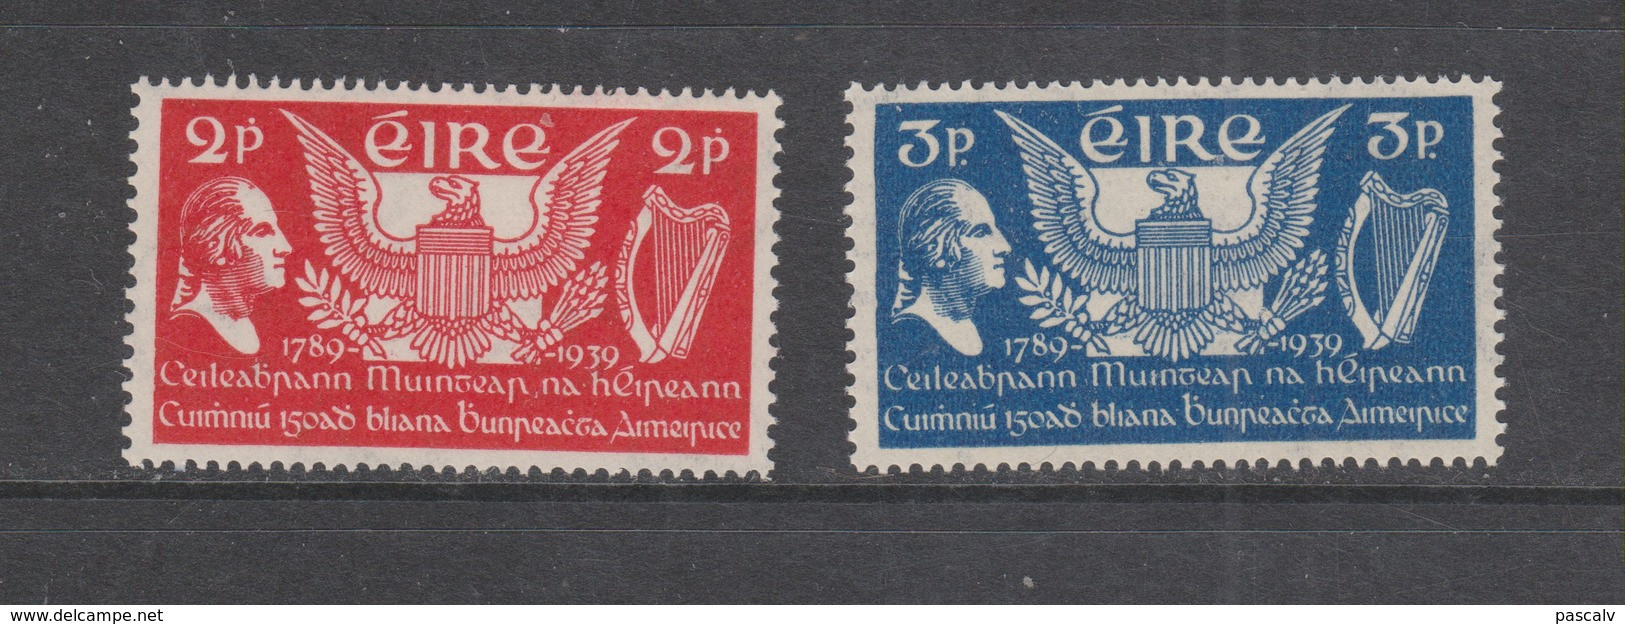 Yvert 75 / 76 ** Neufs Sans Charnière MNH - Unused Stamps